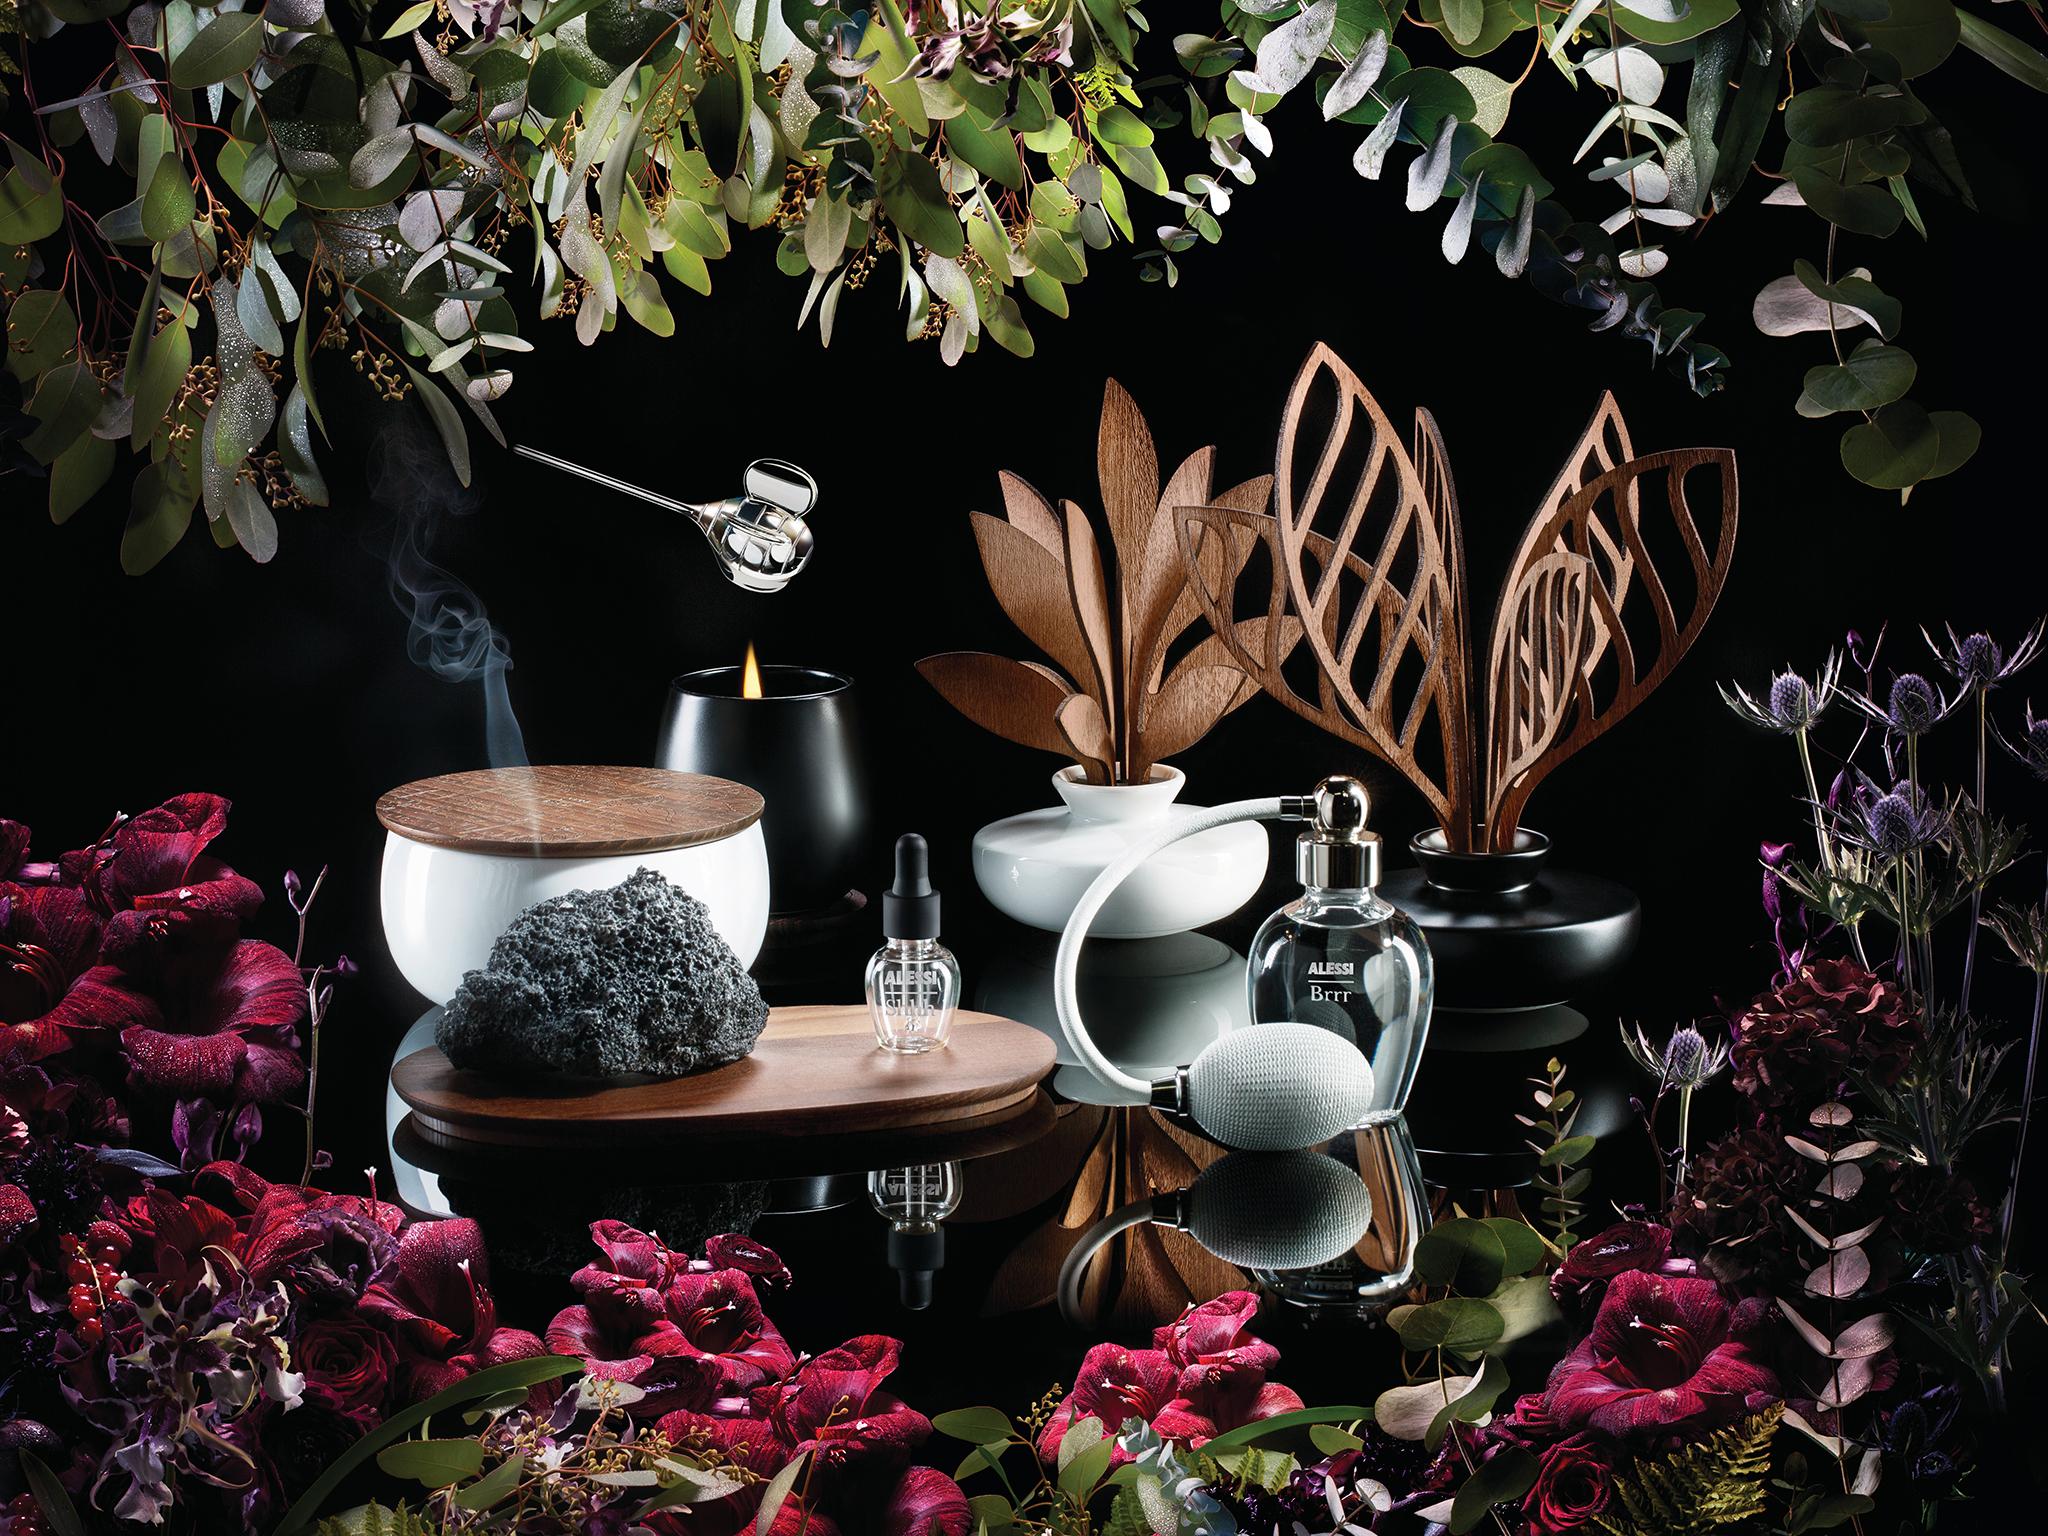 The Five Seasons collection celebrates design as a multi-sensory experience